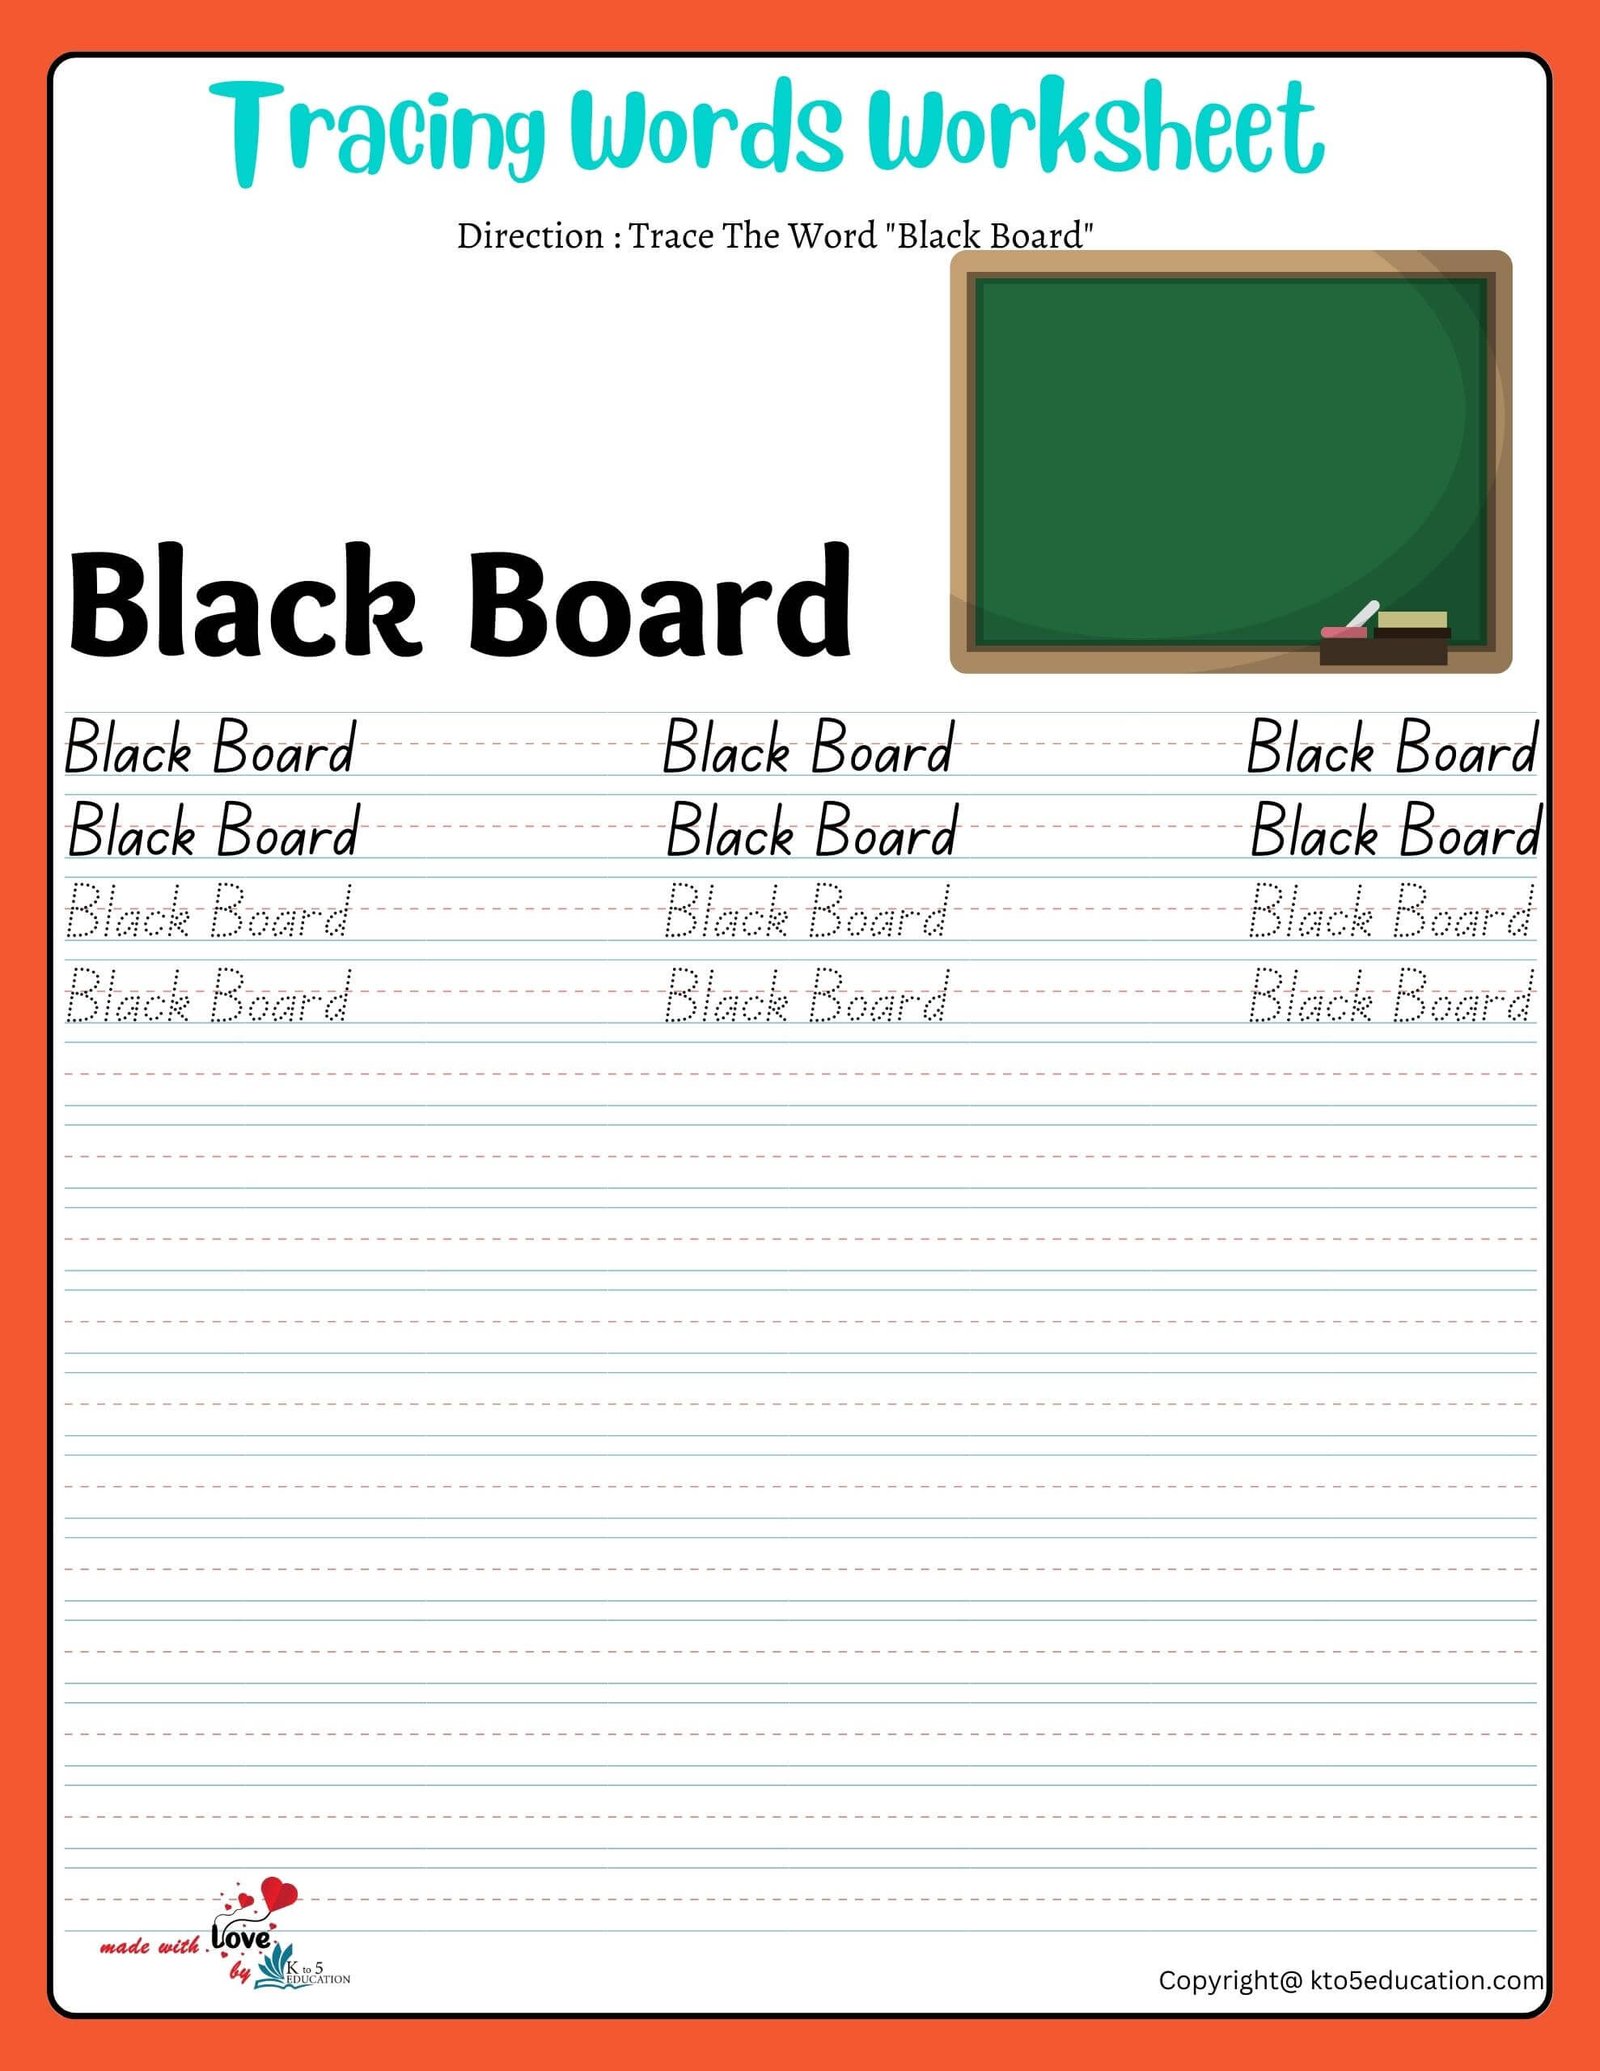 Trace The Word Black Board Worksheet